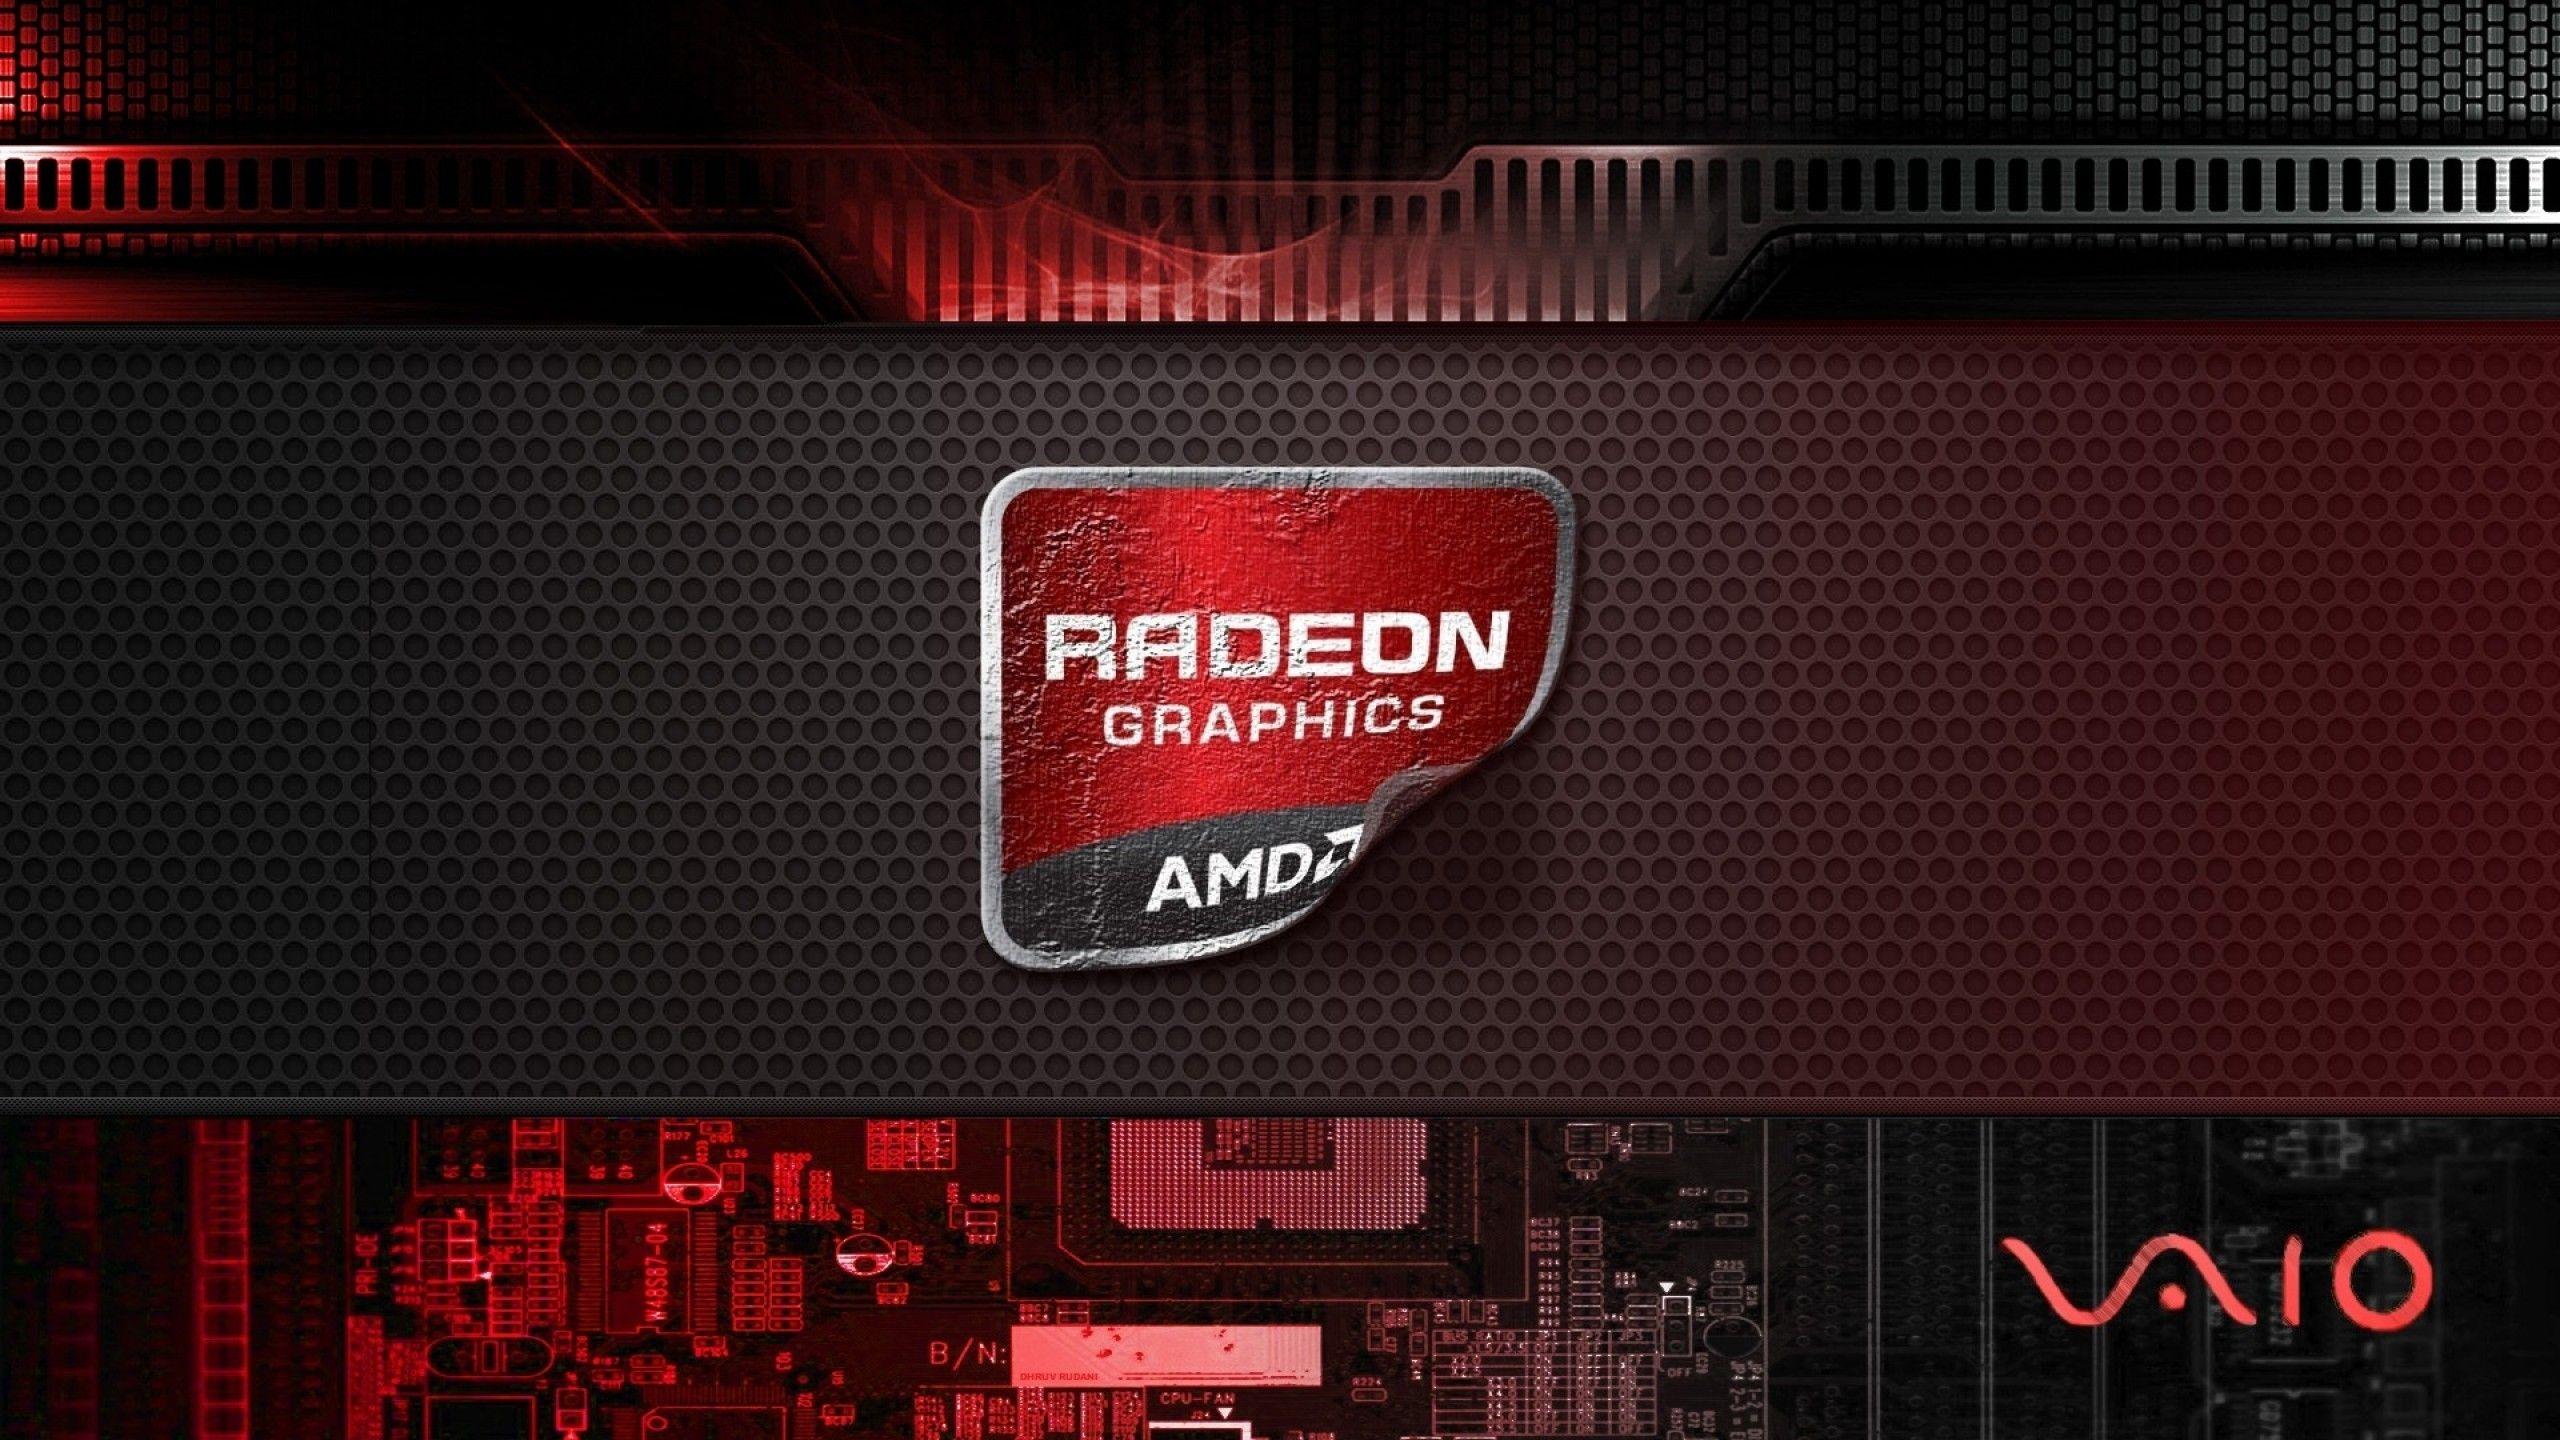 Амд радеон график. АМД видеокарты 1080. Фон рабочего стола АМД. AMD Radeon обои. Обои на рабочий стол радеон.